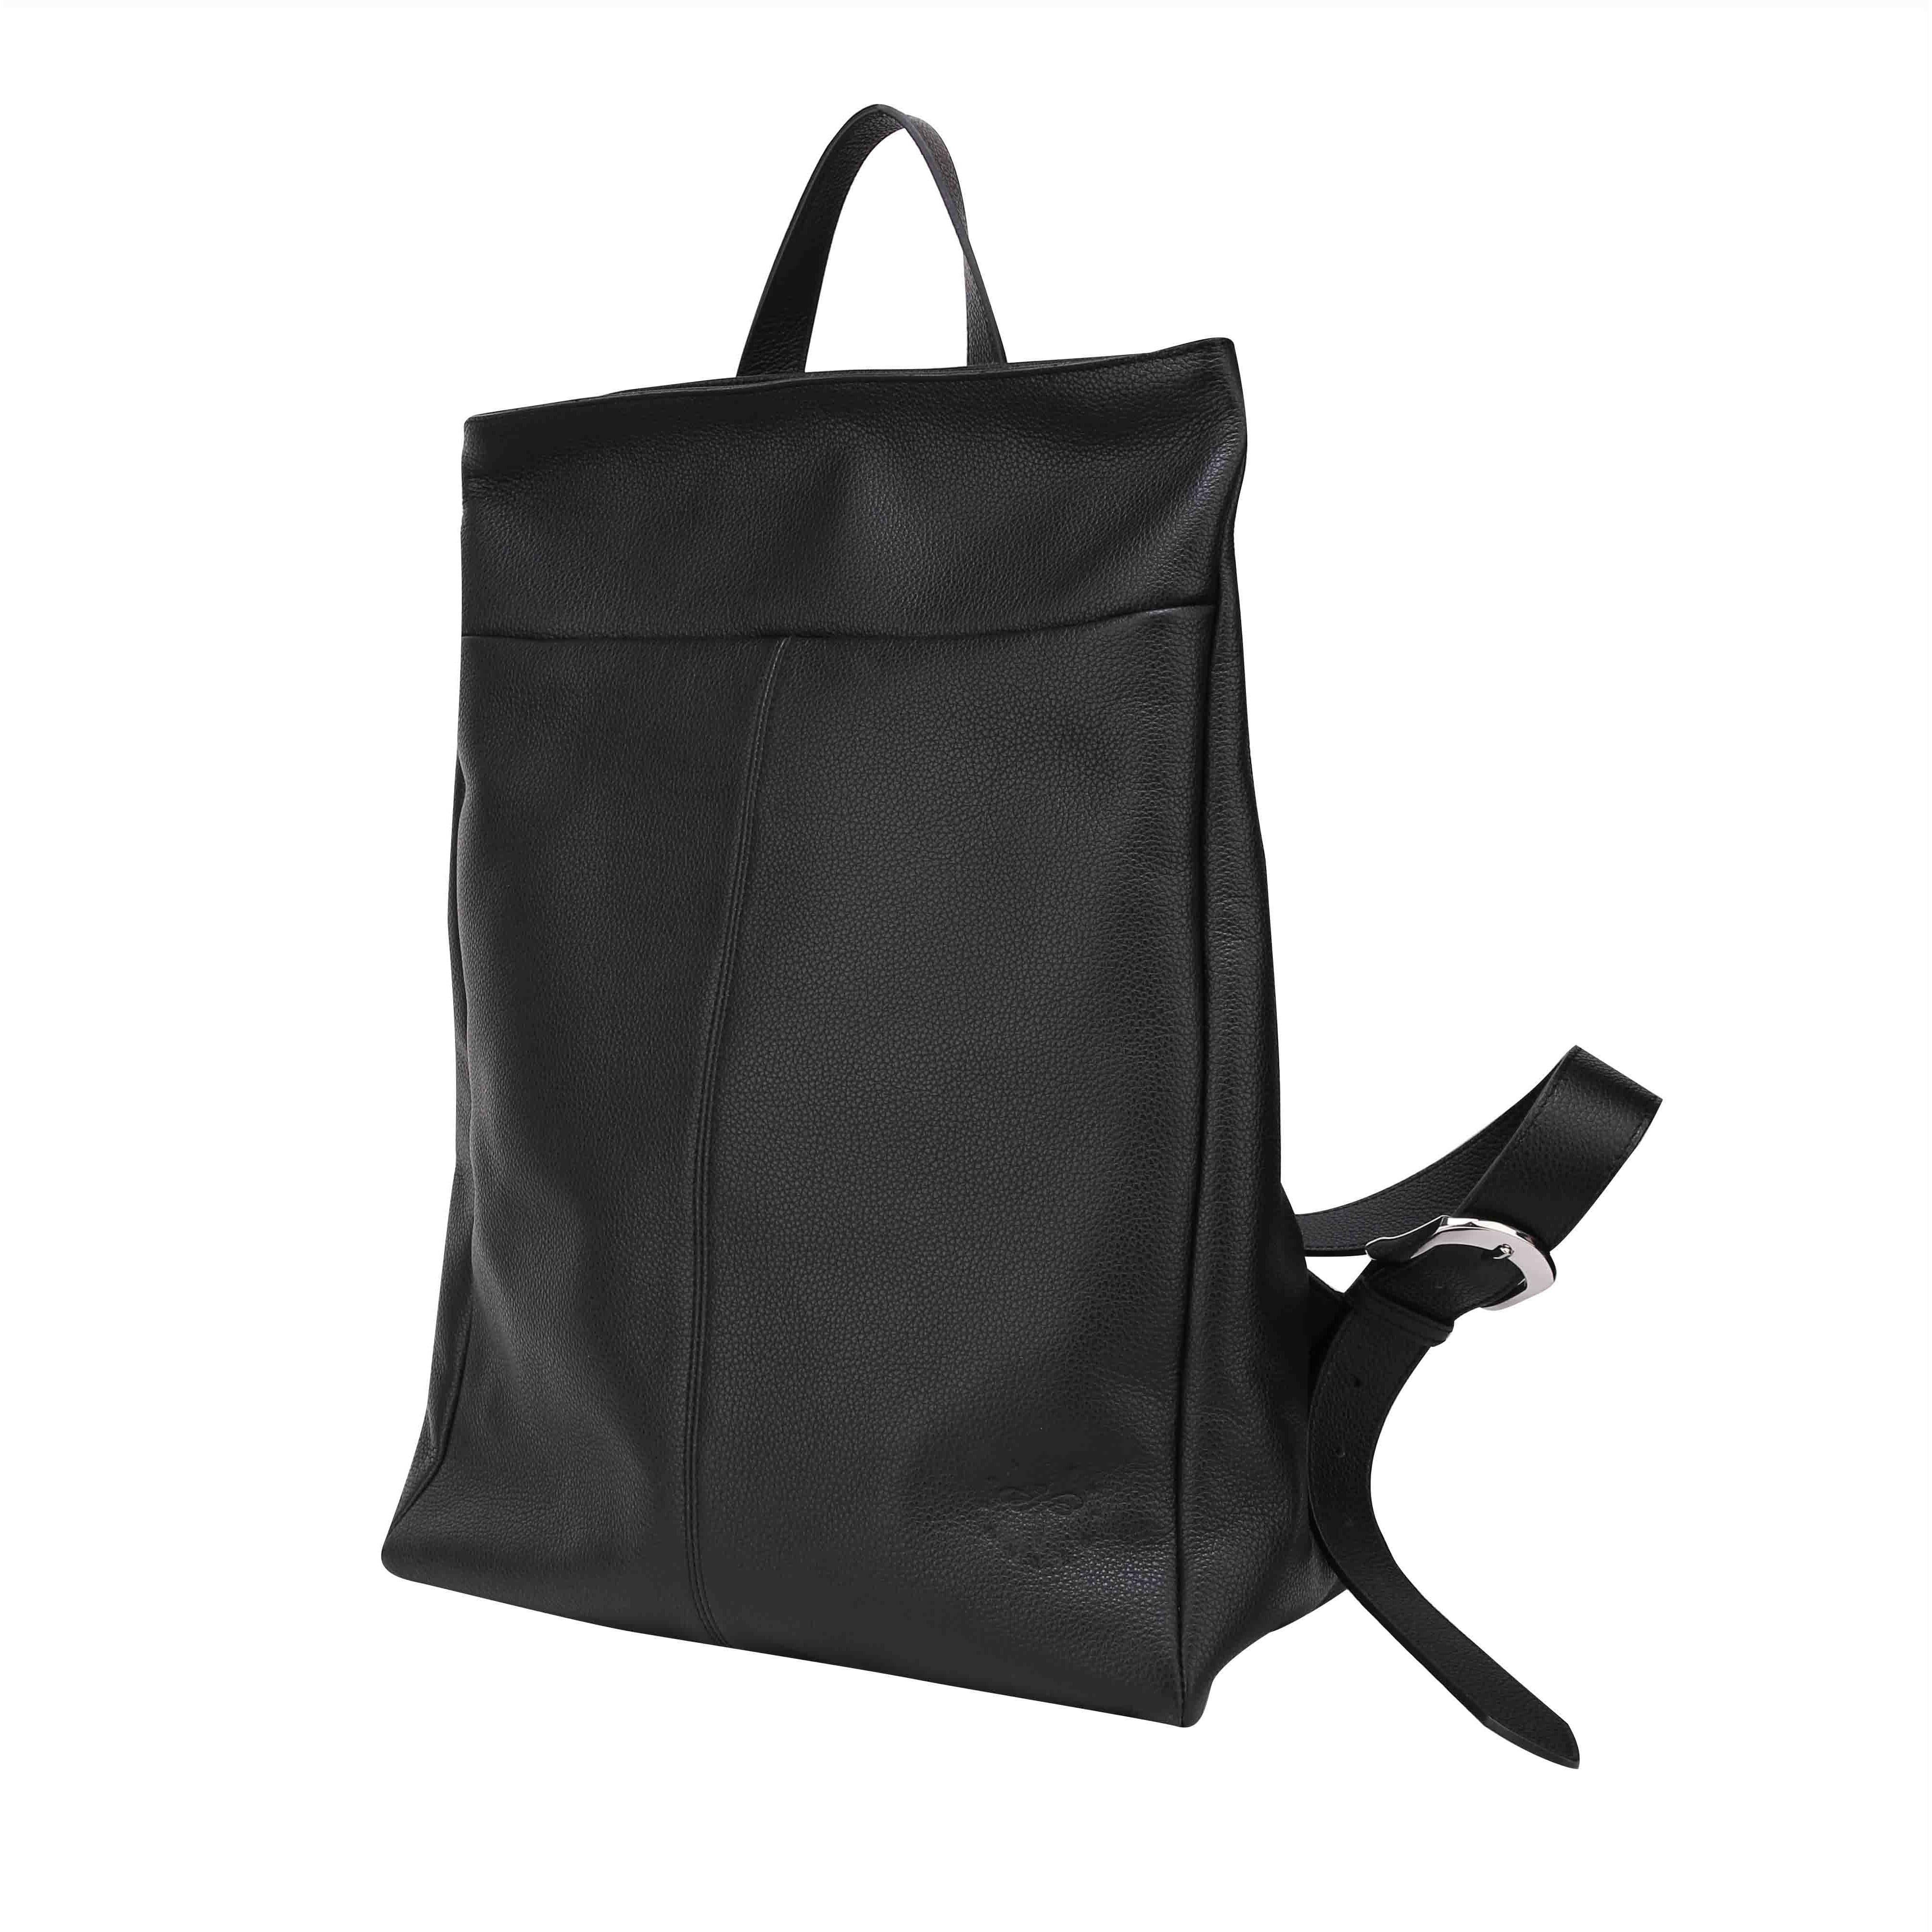 Carlotta Ambra Women Rucksacks Shopping Shoulder and Tote Bag